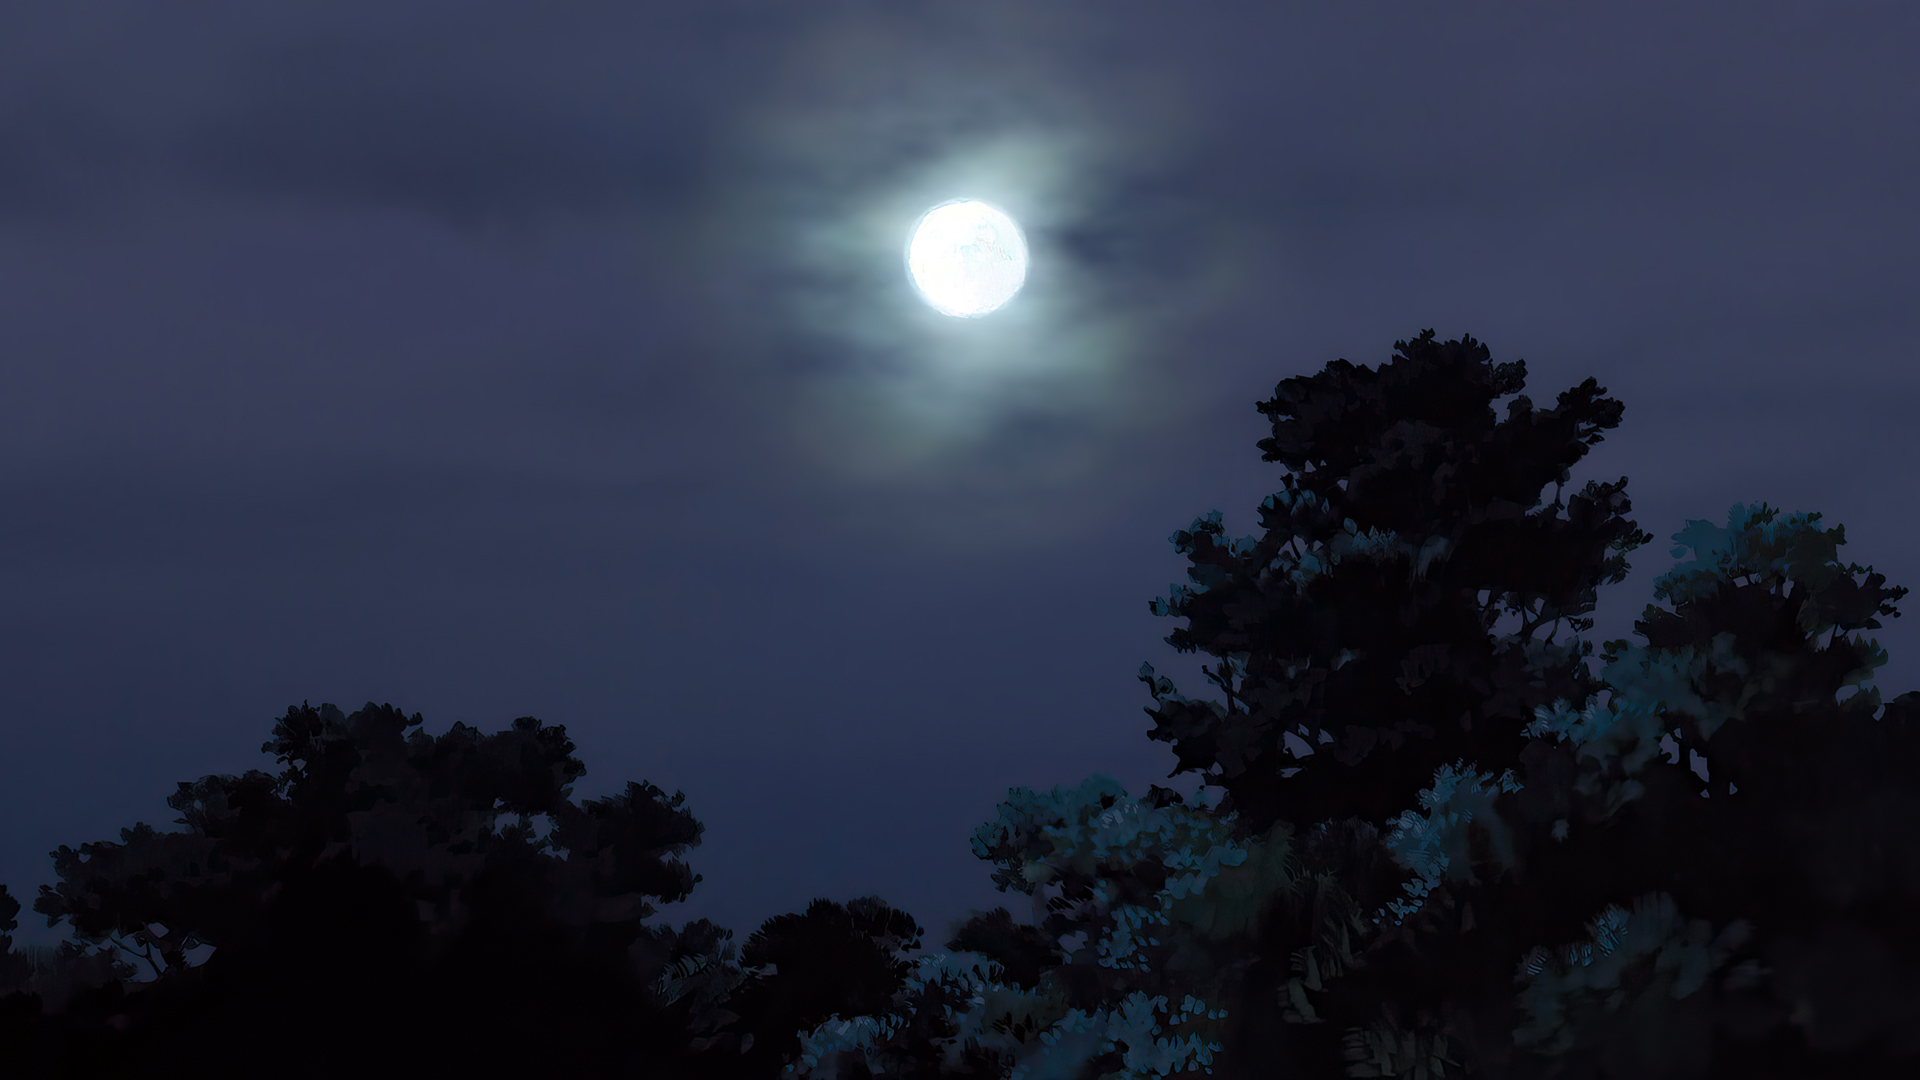 Anime 1920x1080 Kokuriko-zaka kara animated movies anime animation film stills Studio Ghibli Moon trees forest night sky